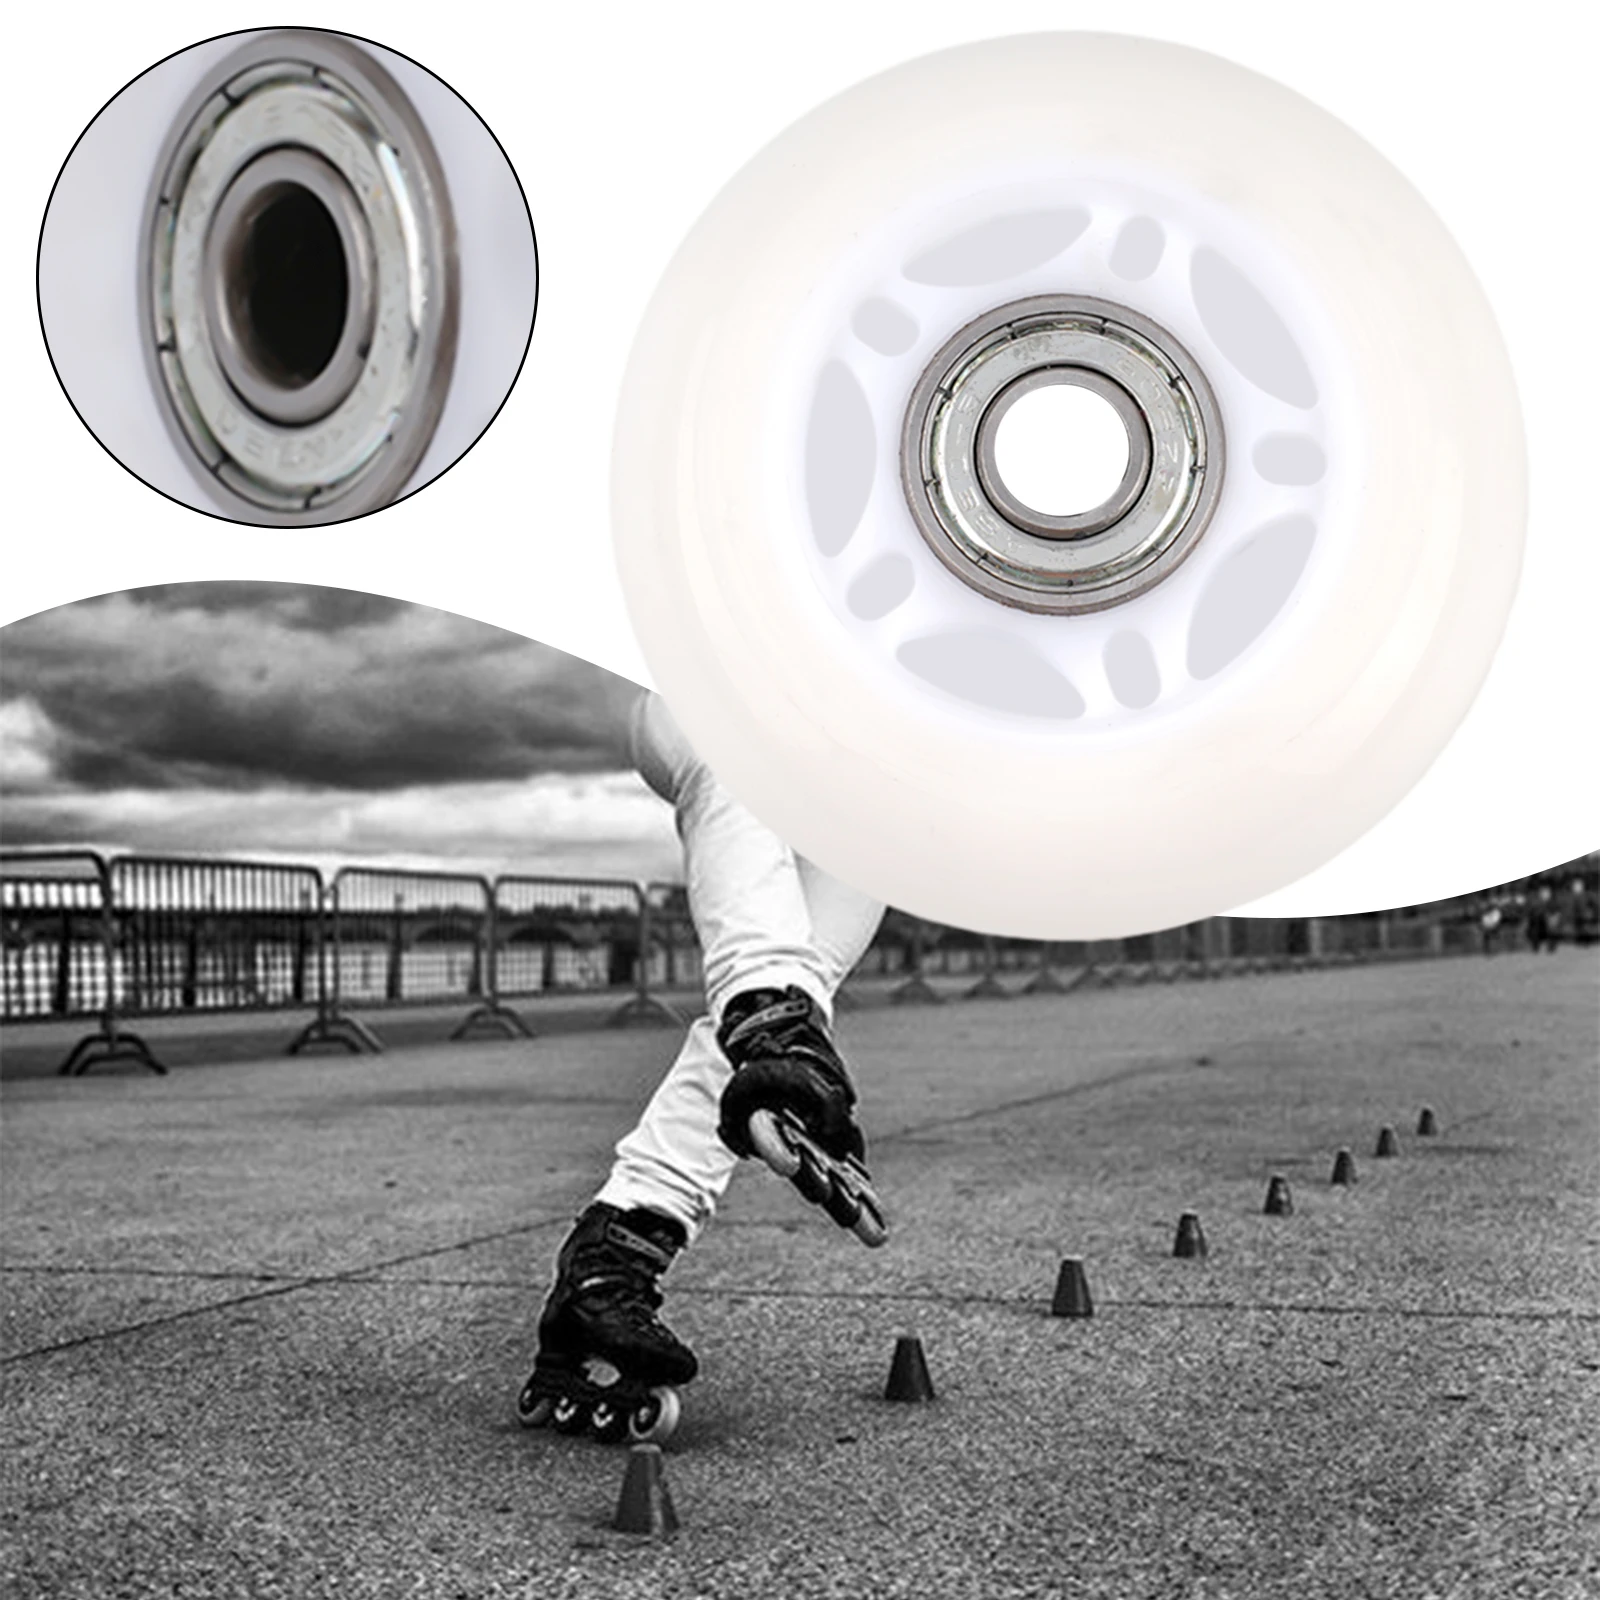 

1pc Inline Skate Wheels High Elasticity Wear-resistant No Noise Polyurethane PU Gym Accessories For Skates Roller Skates Luggage